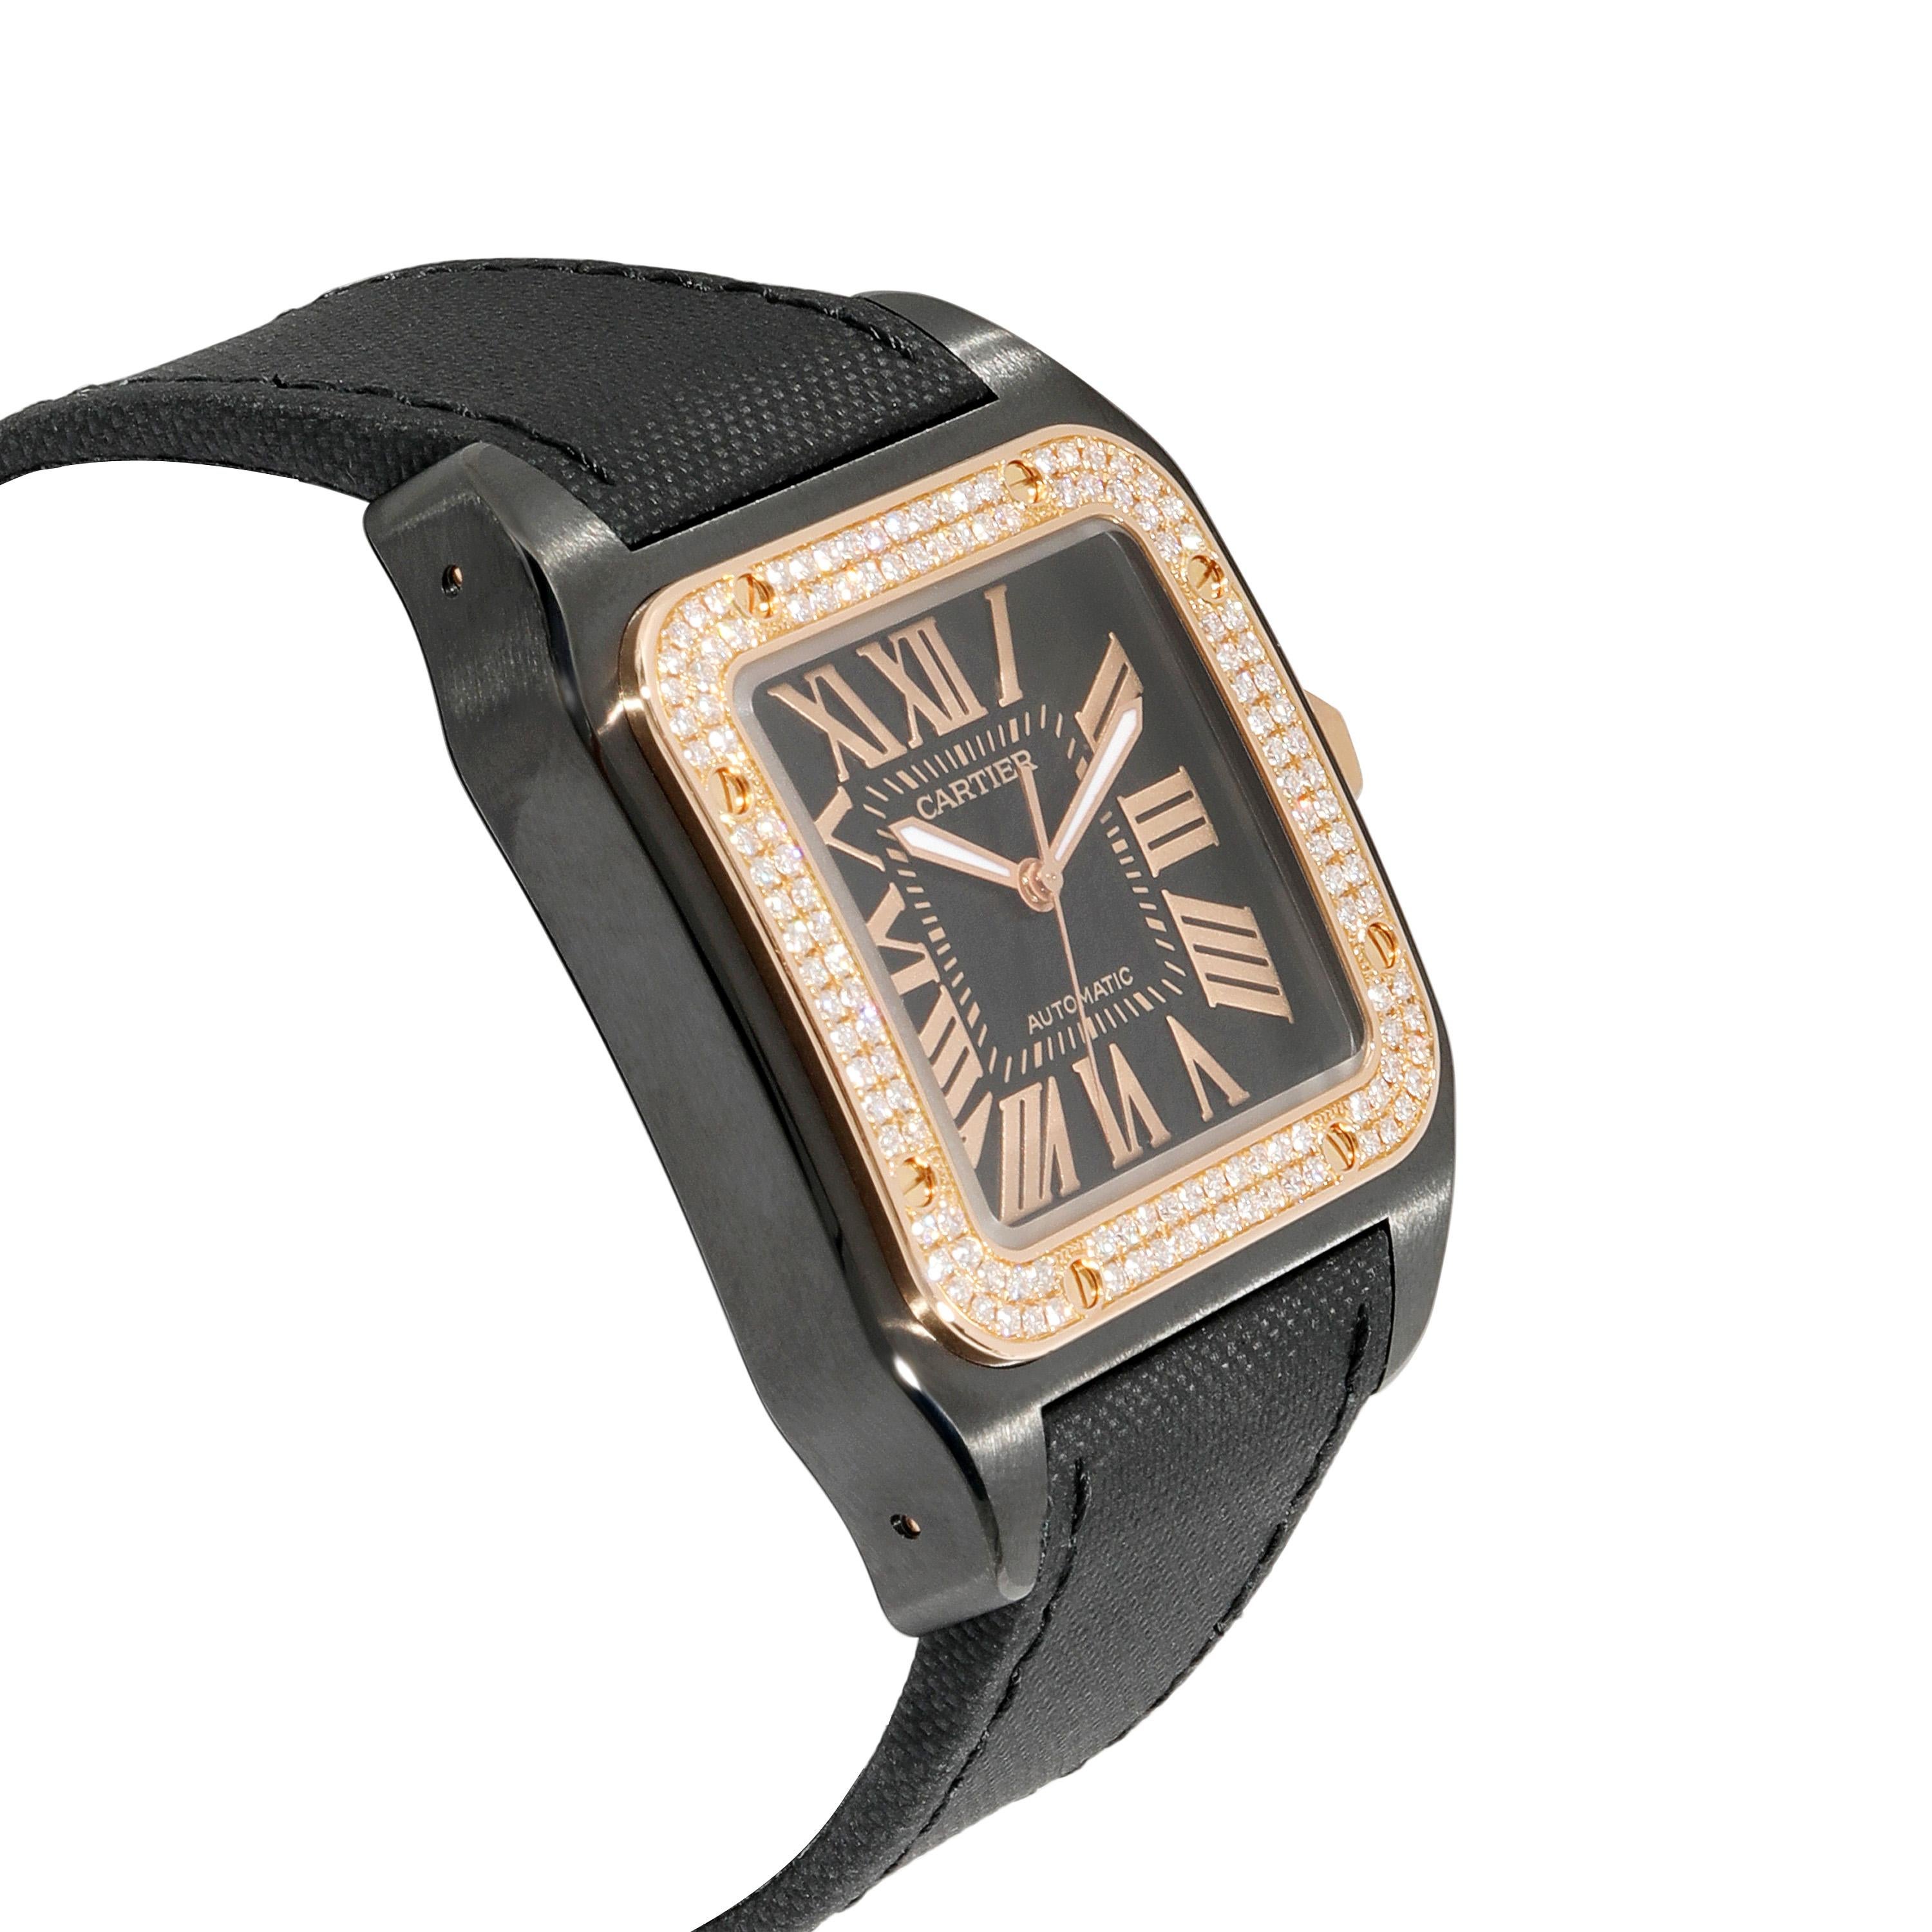 Cartier 2656 177600PX WM505016 Men's Watch in 18kt PVD 1